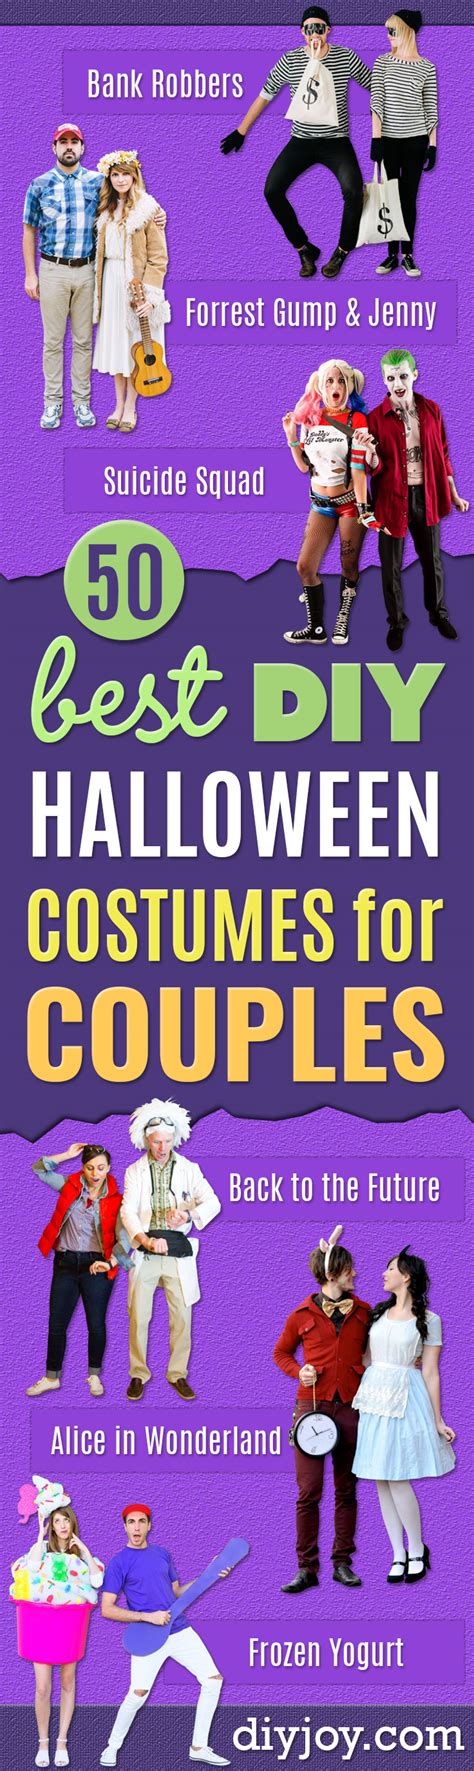 50 Best DIY Halloween Costumes for Couples